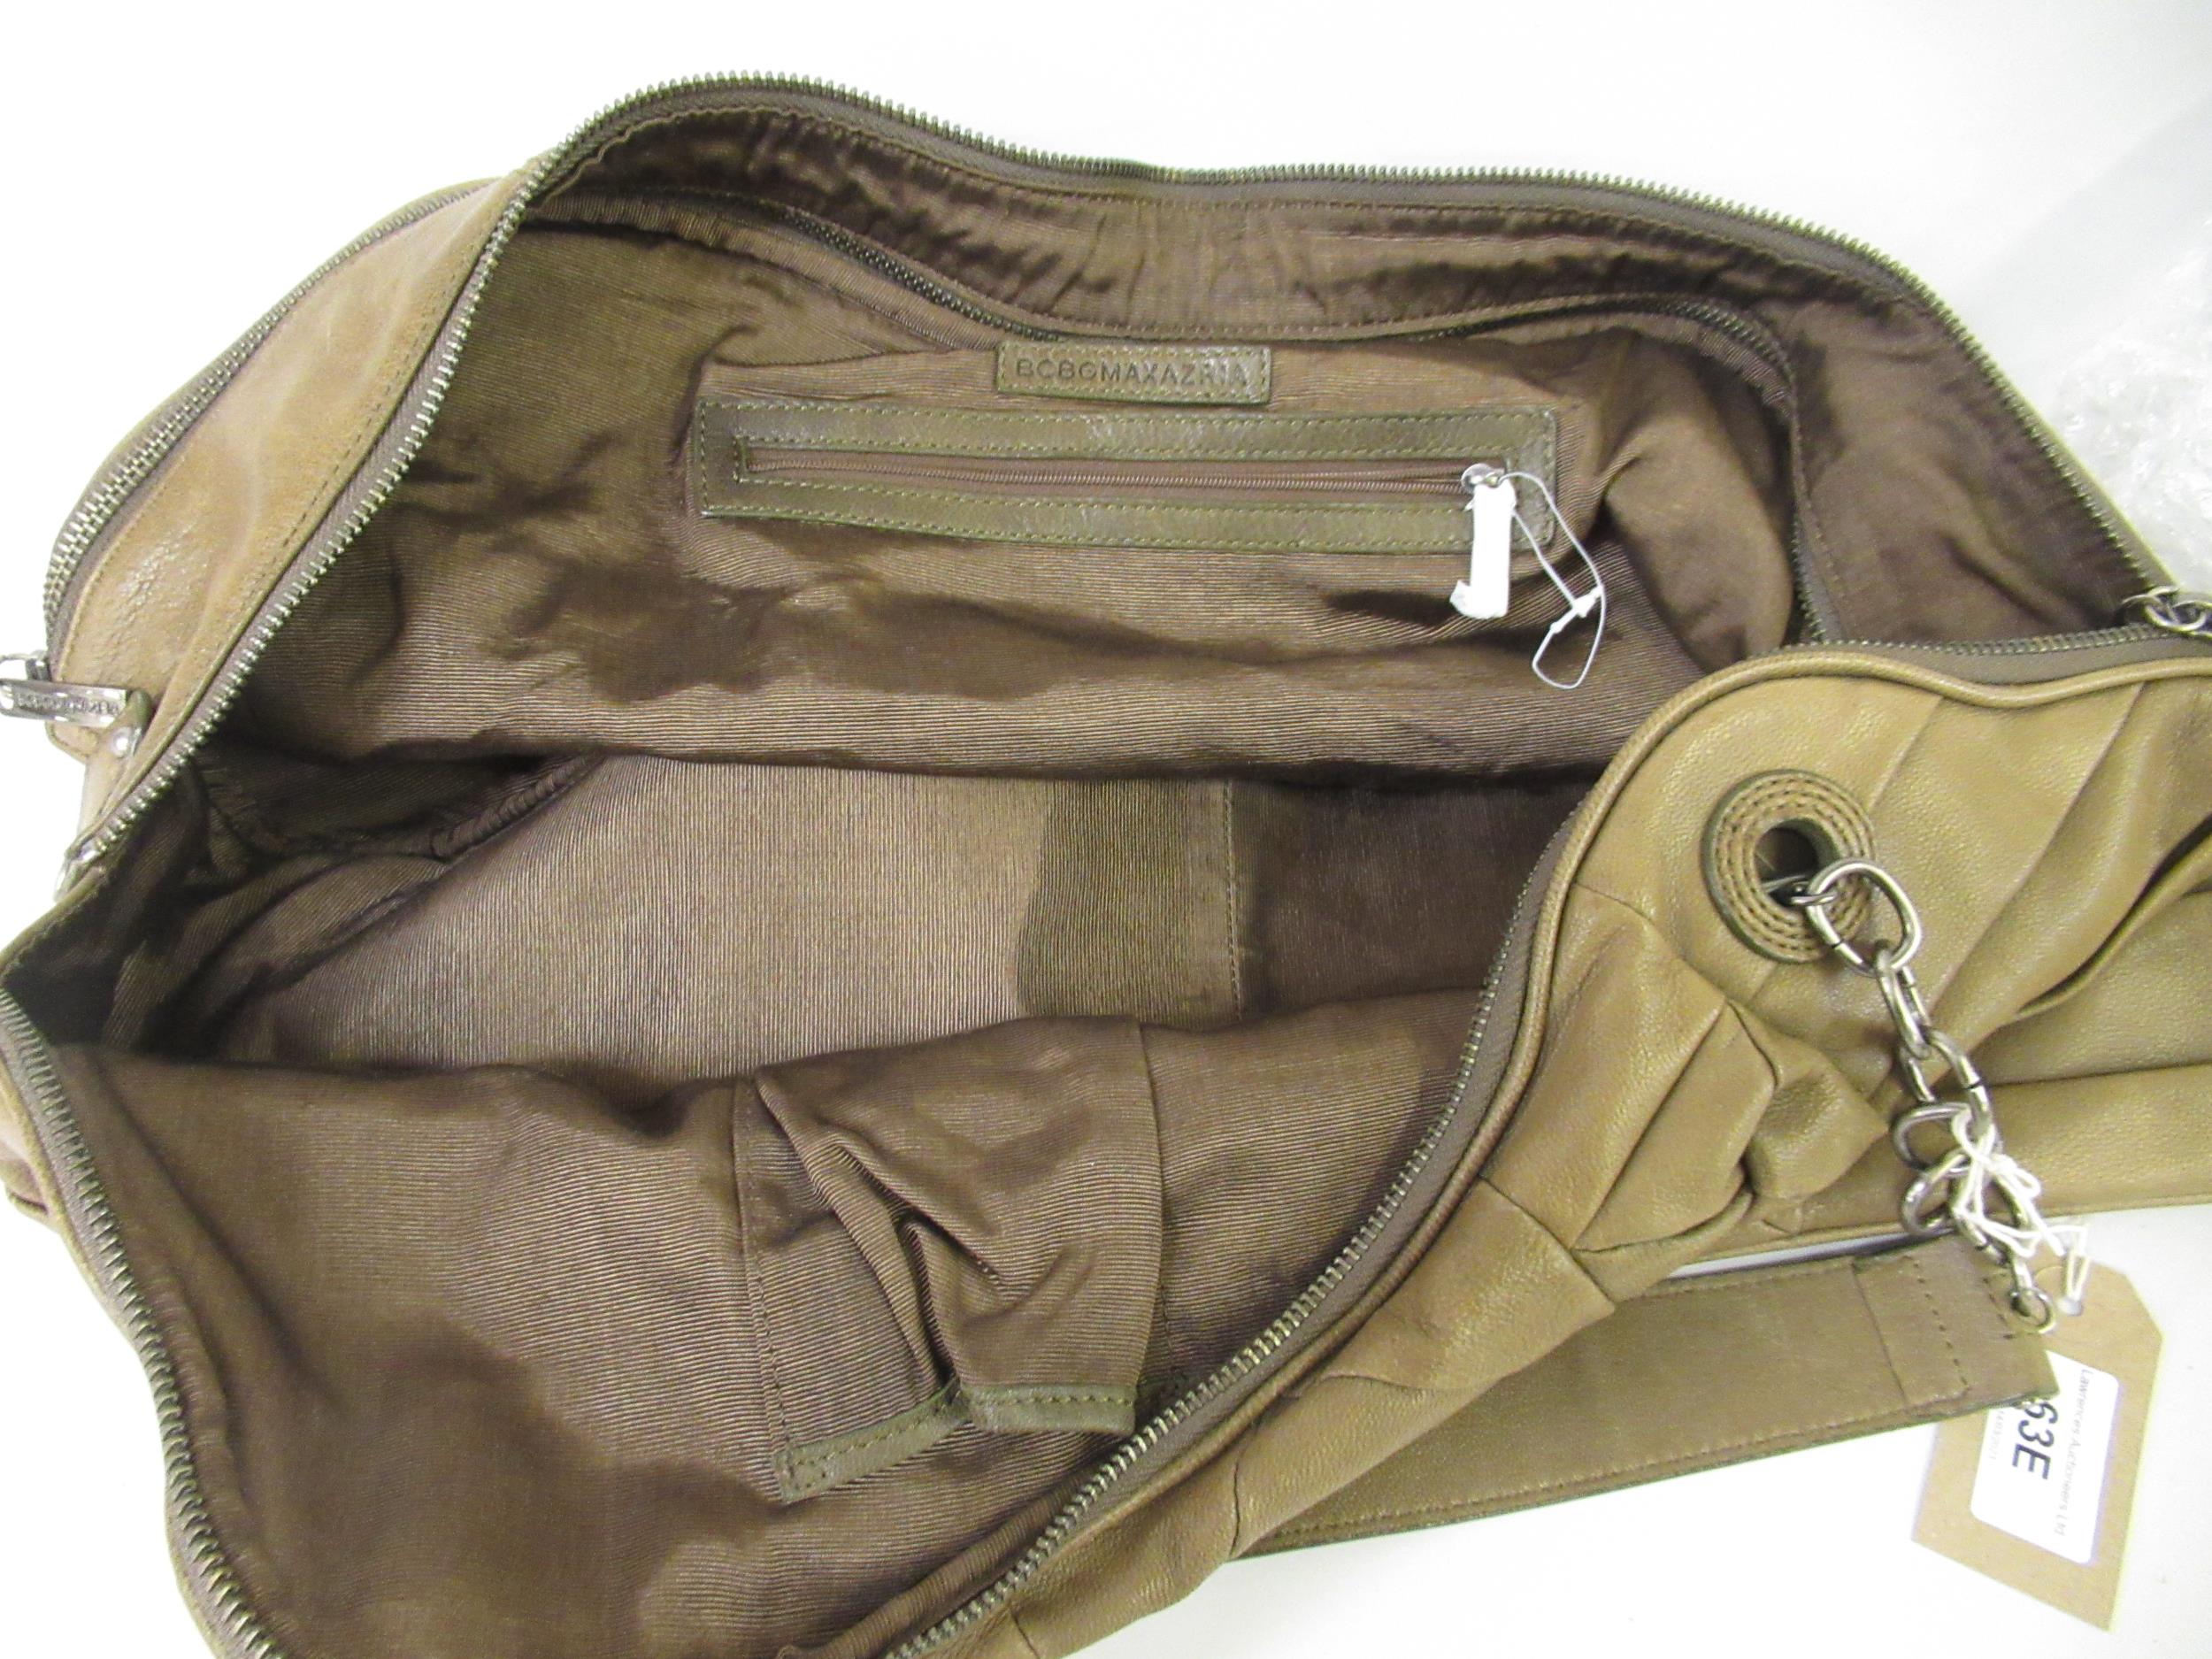 BCBG Max Azria, large green leather shoulder bag One zip tag missing - Image 7 of 9